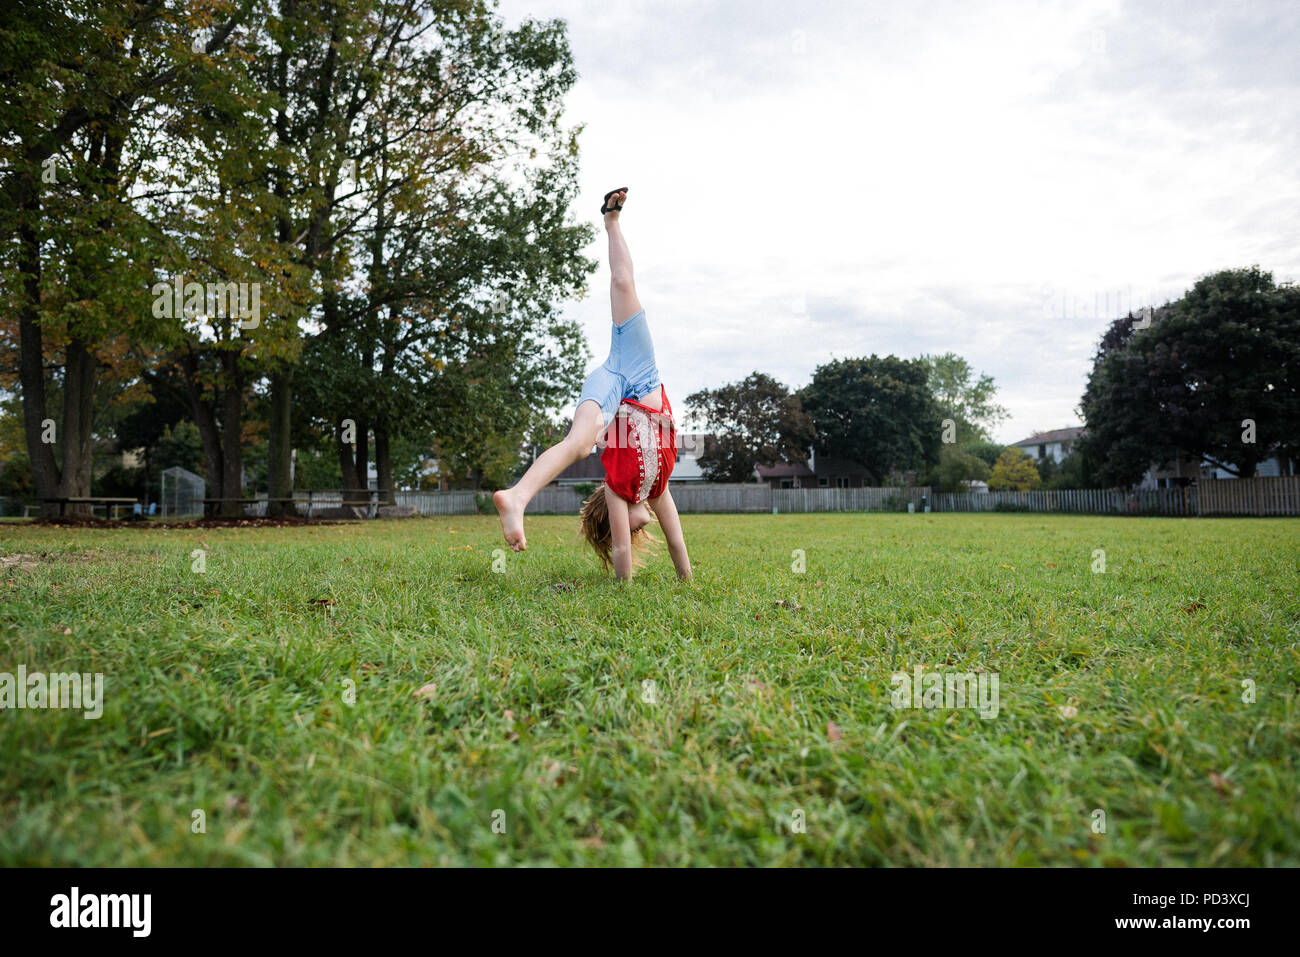 Girl doing cartwheel in park Stock Photo